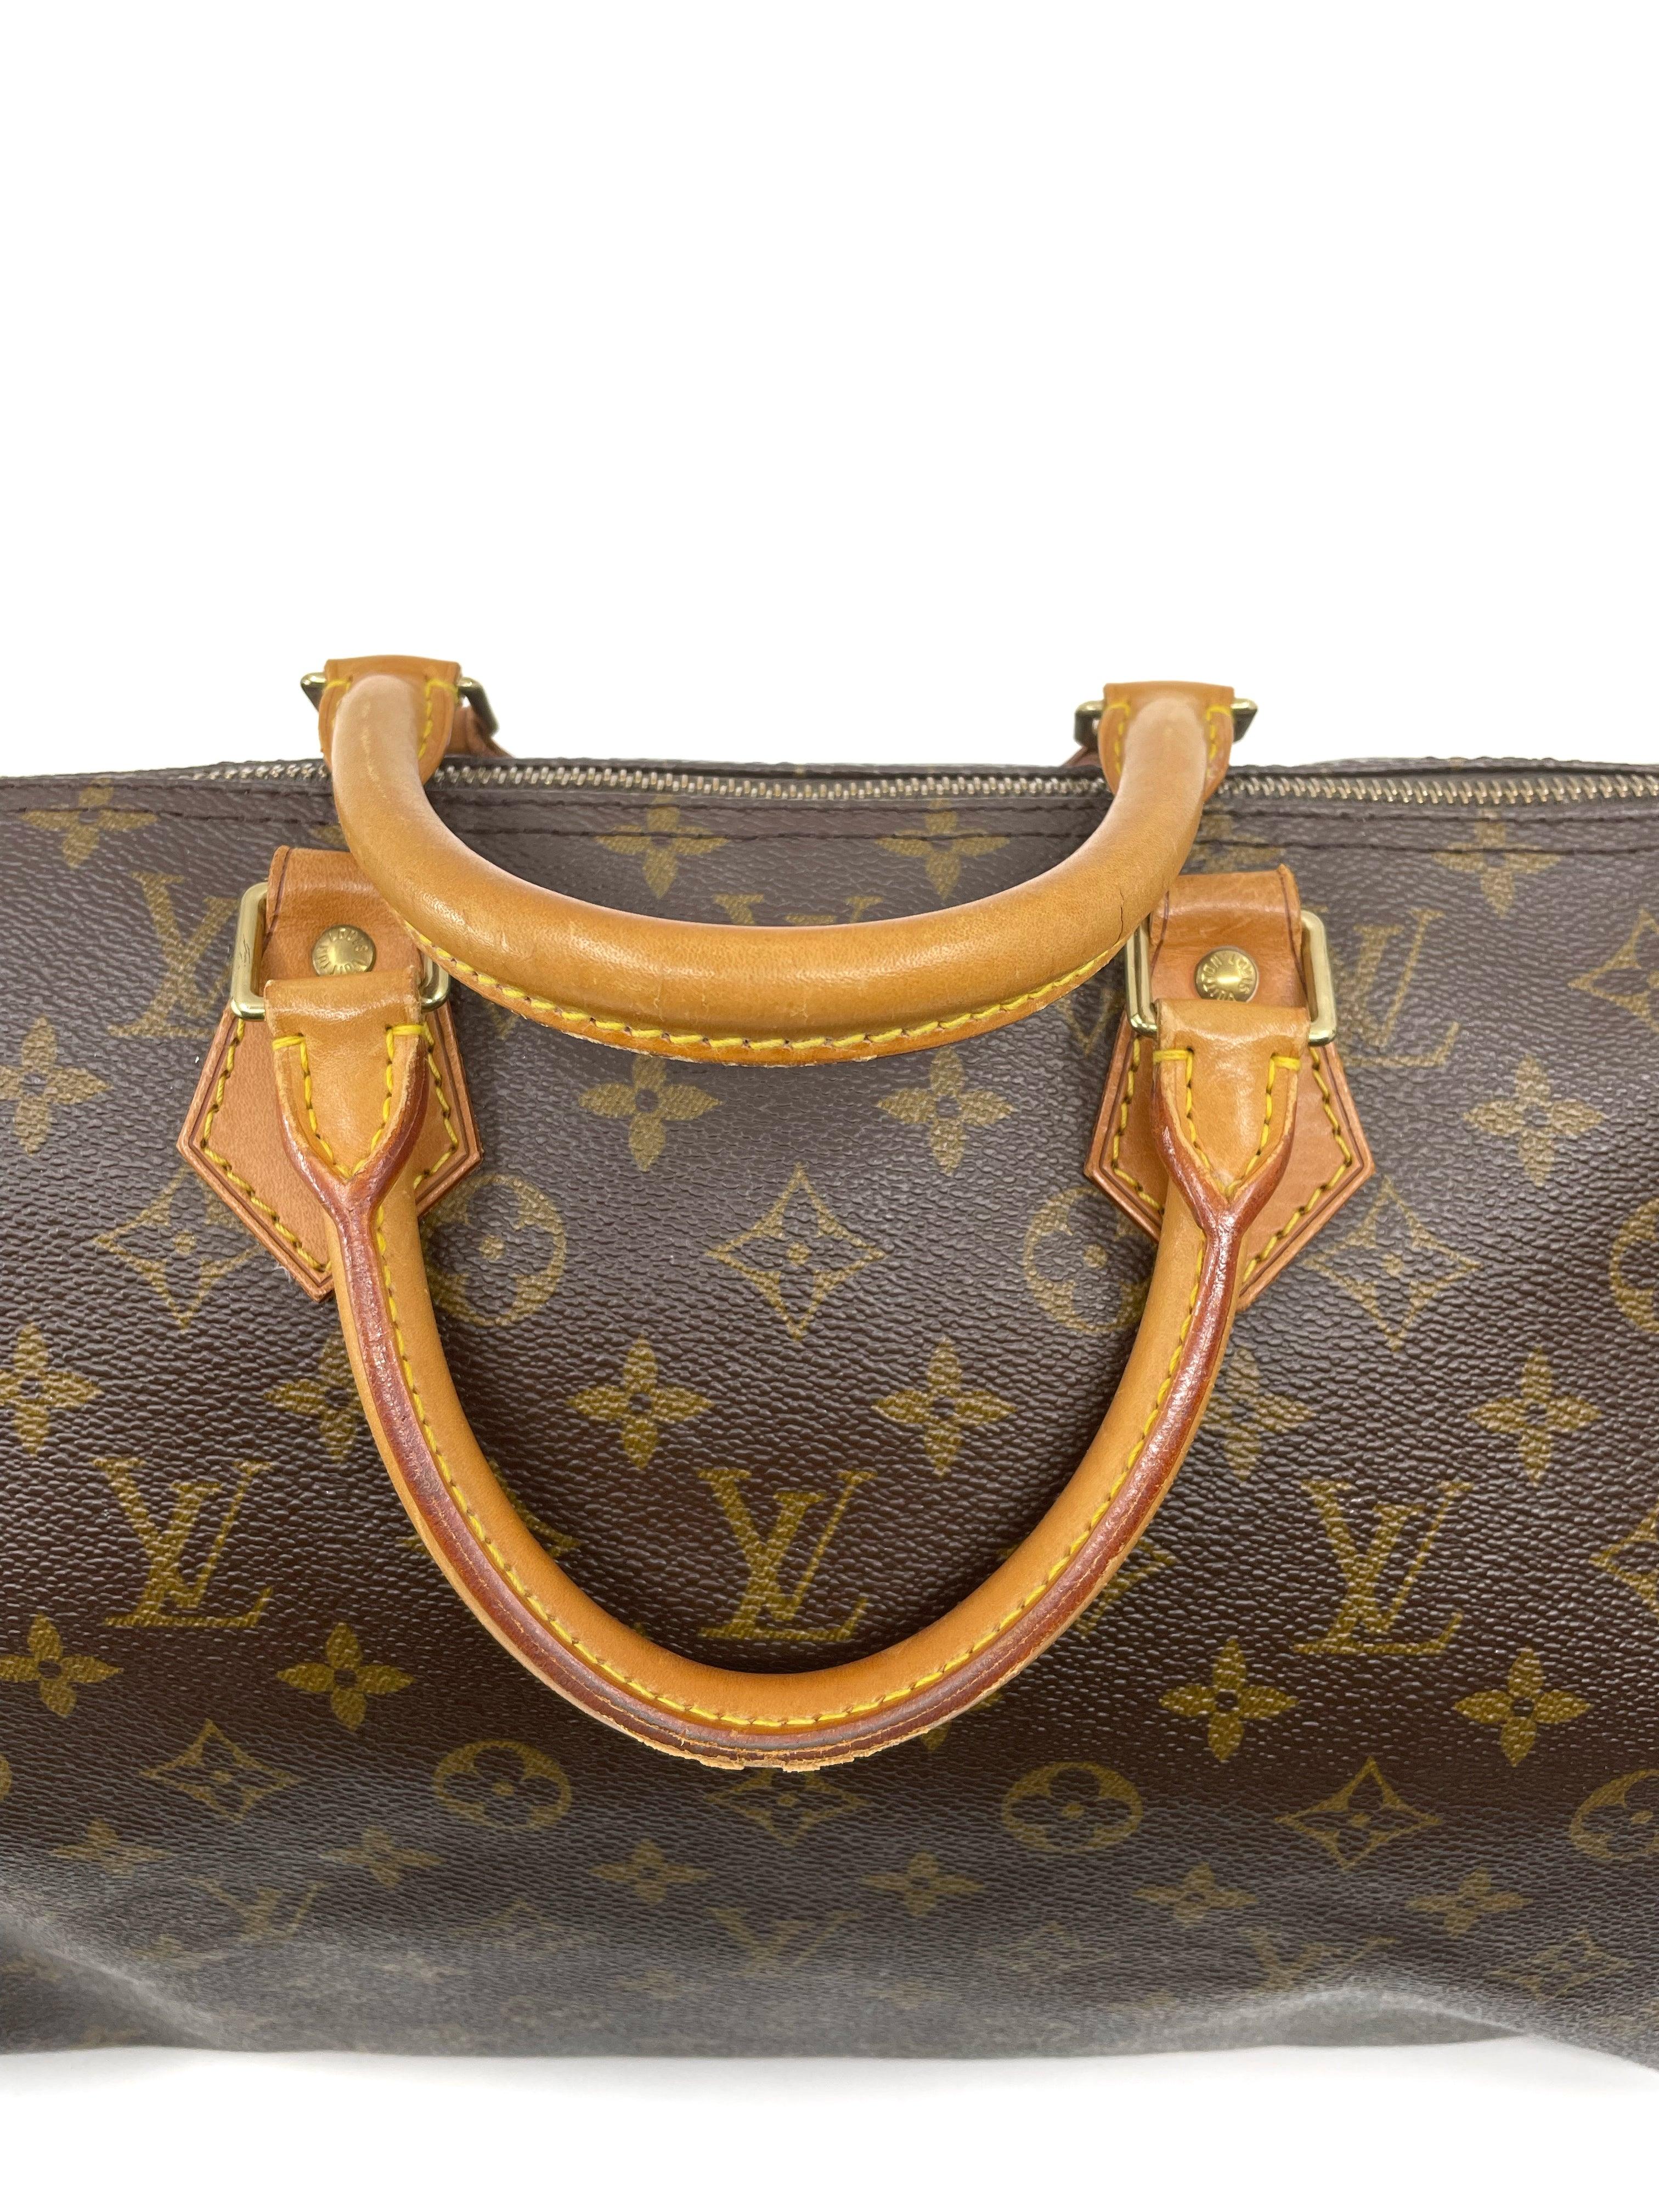 Louis Vuitton Large Monogram Speedy 40 Boston Bag 862723